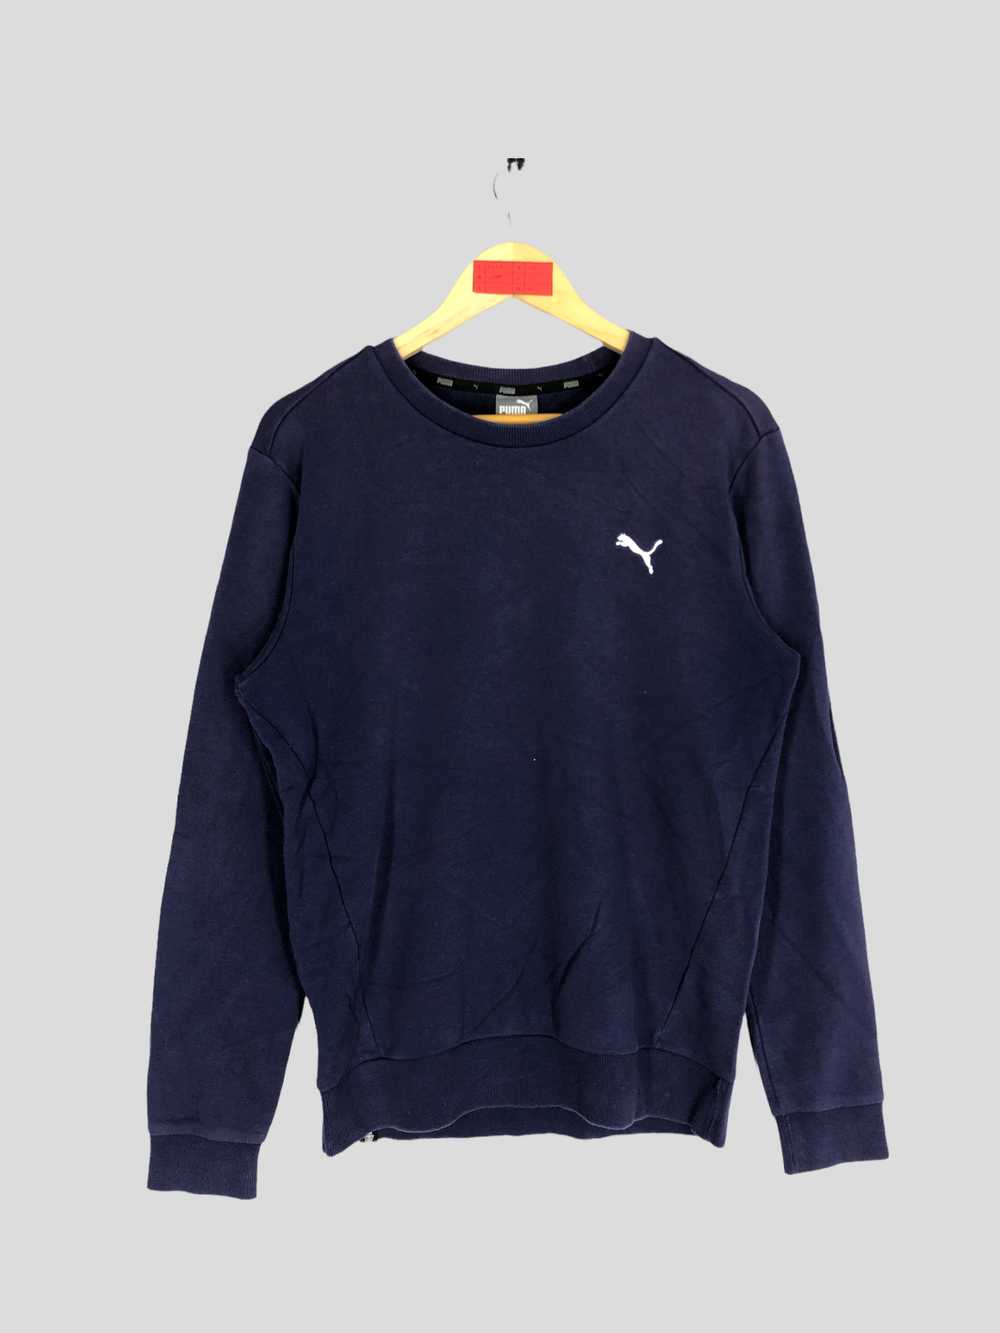 Vintage Puma Sweatshirt crewneck Pullover - image 1